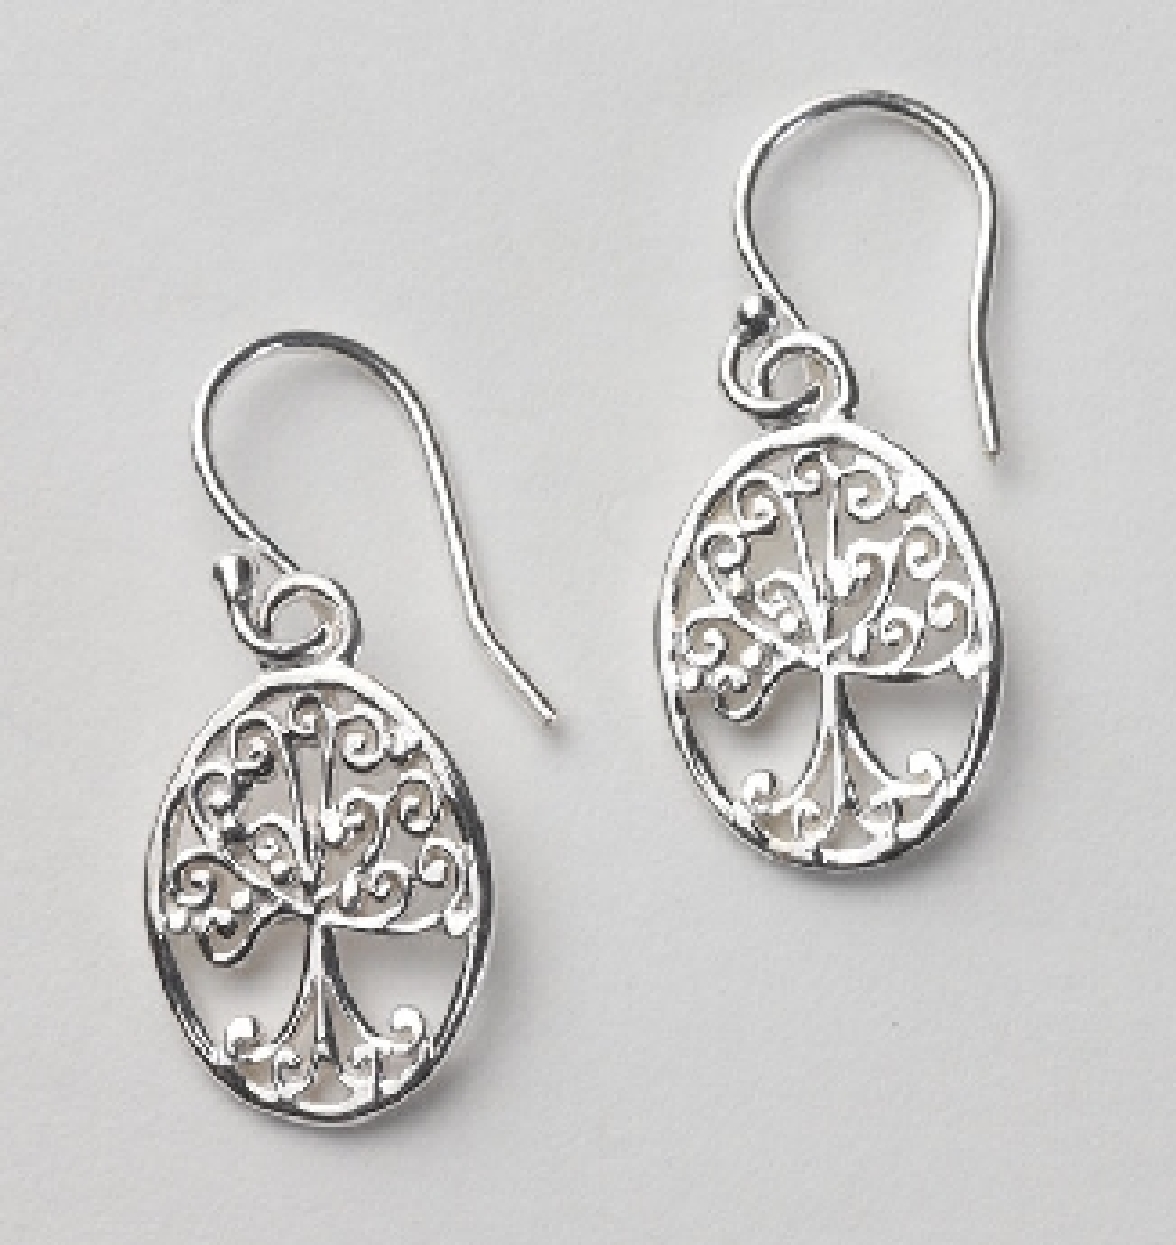 Southern Gates sterling silver small oval oak tree earrings. 3/4   high by 1/2   wide (approx.) 
E415